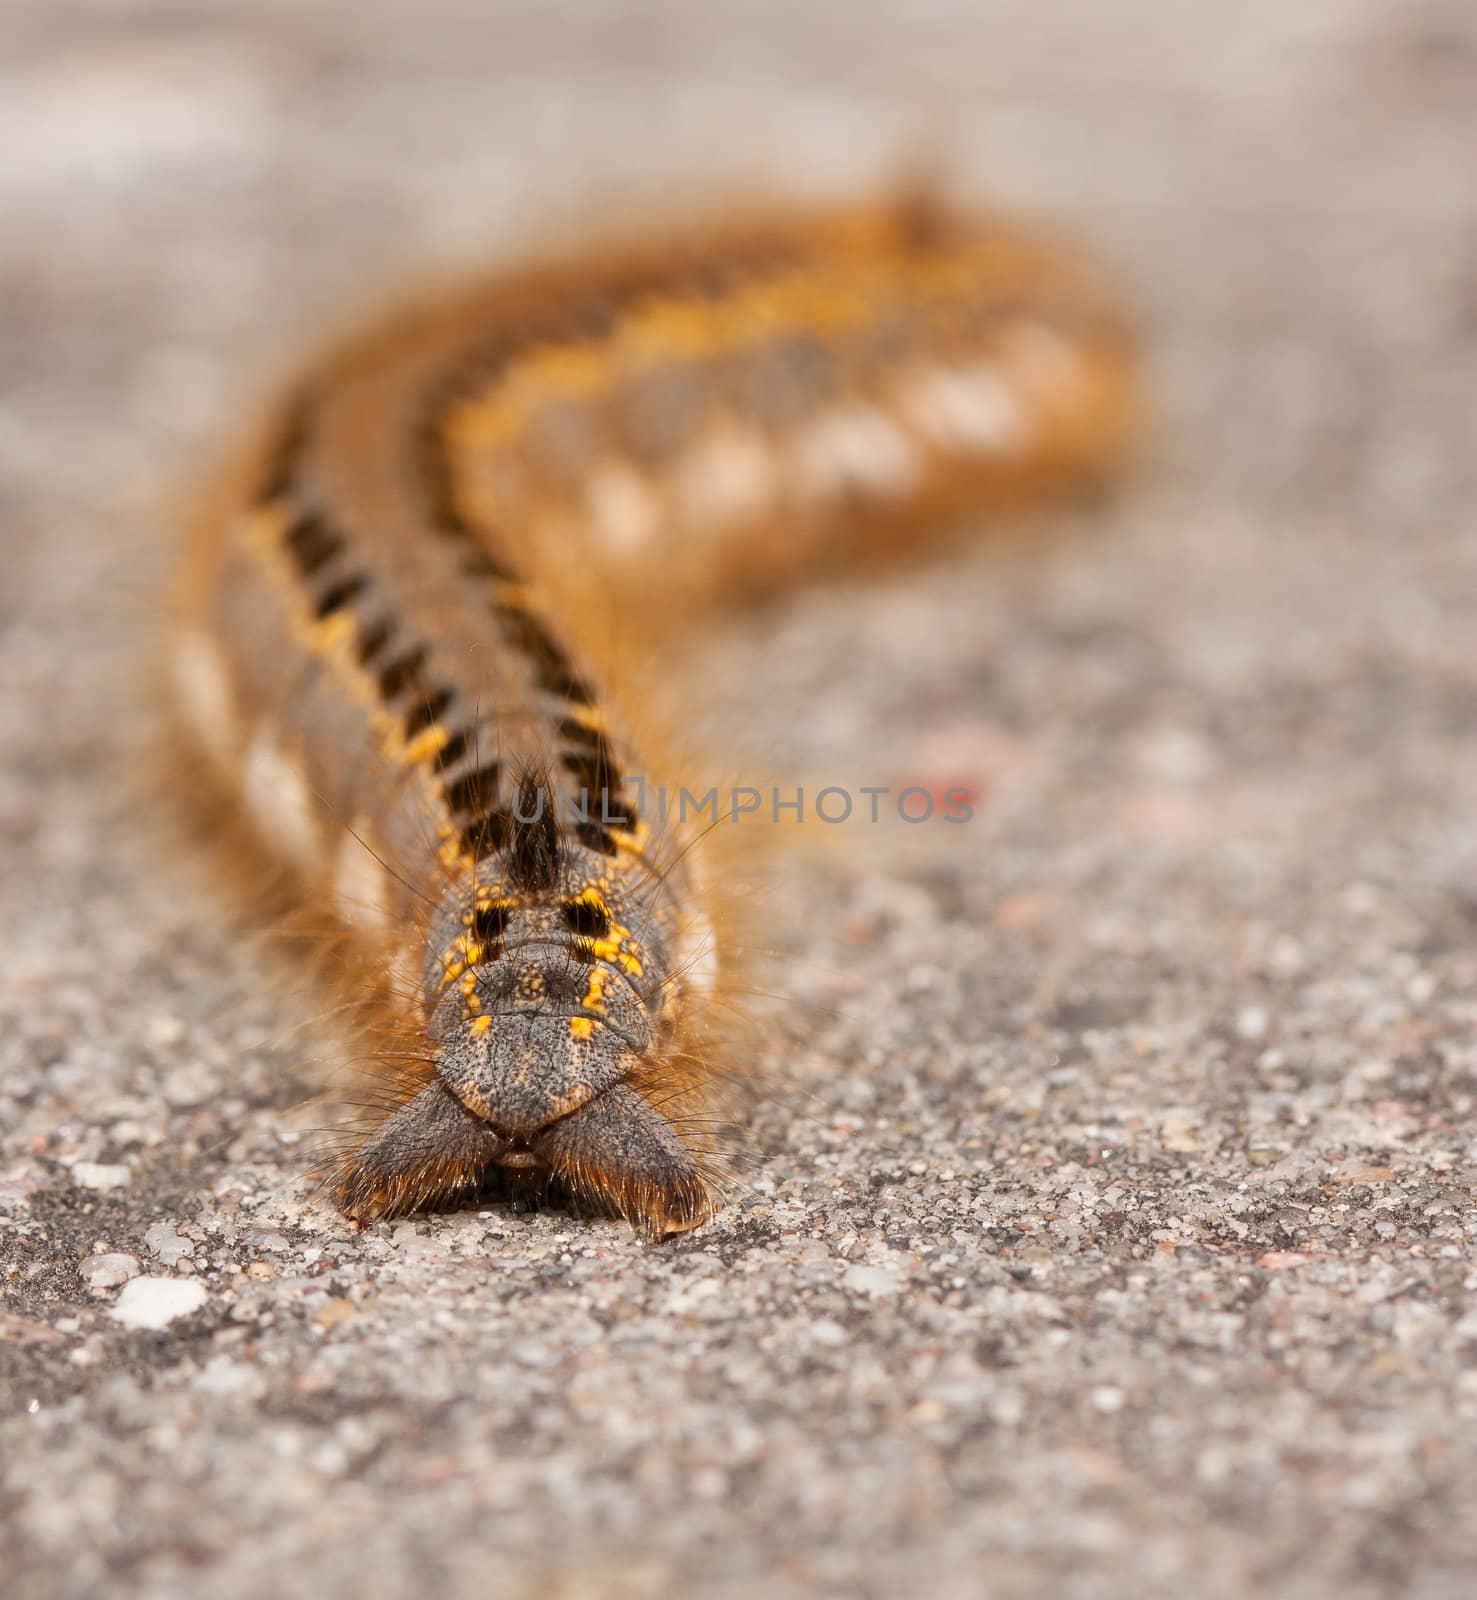 A caterpillar  by michaklootwijk